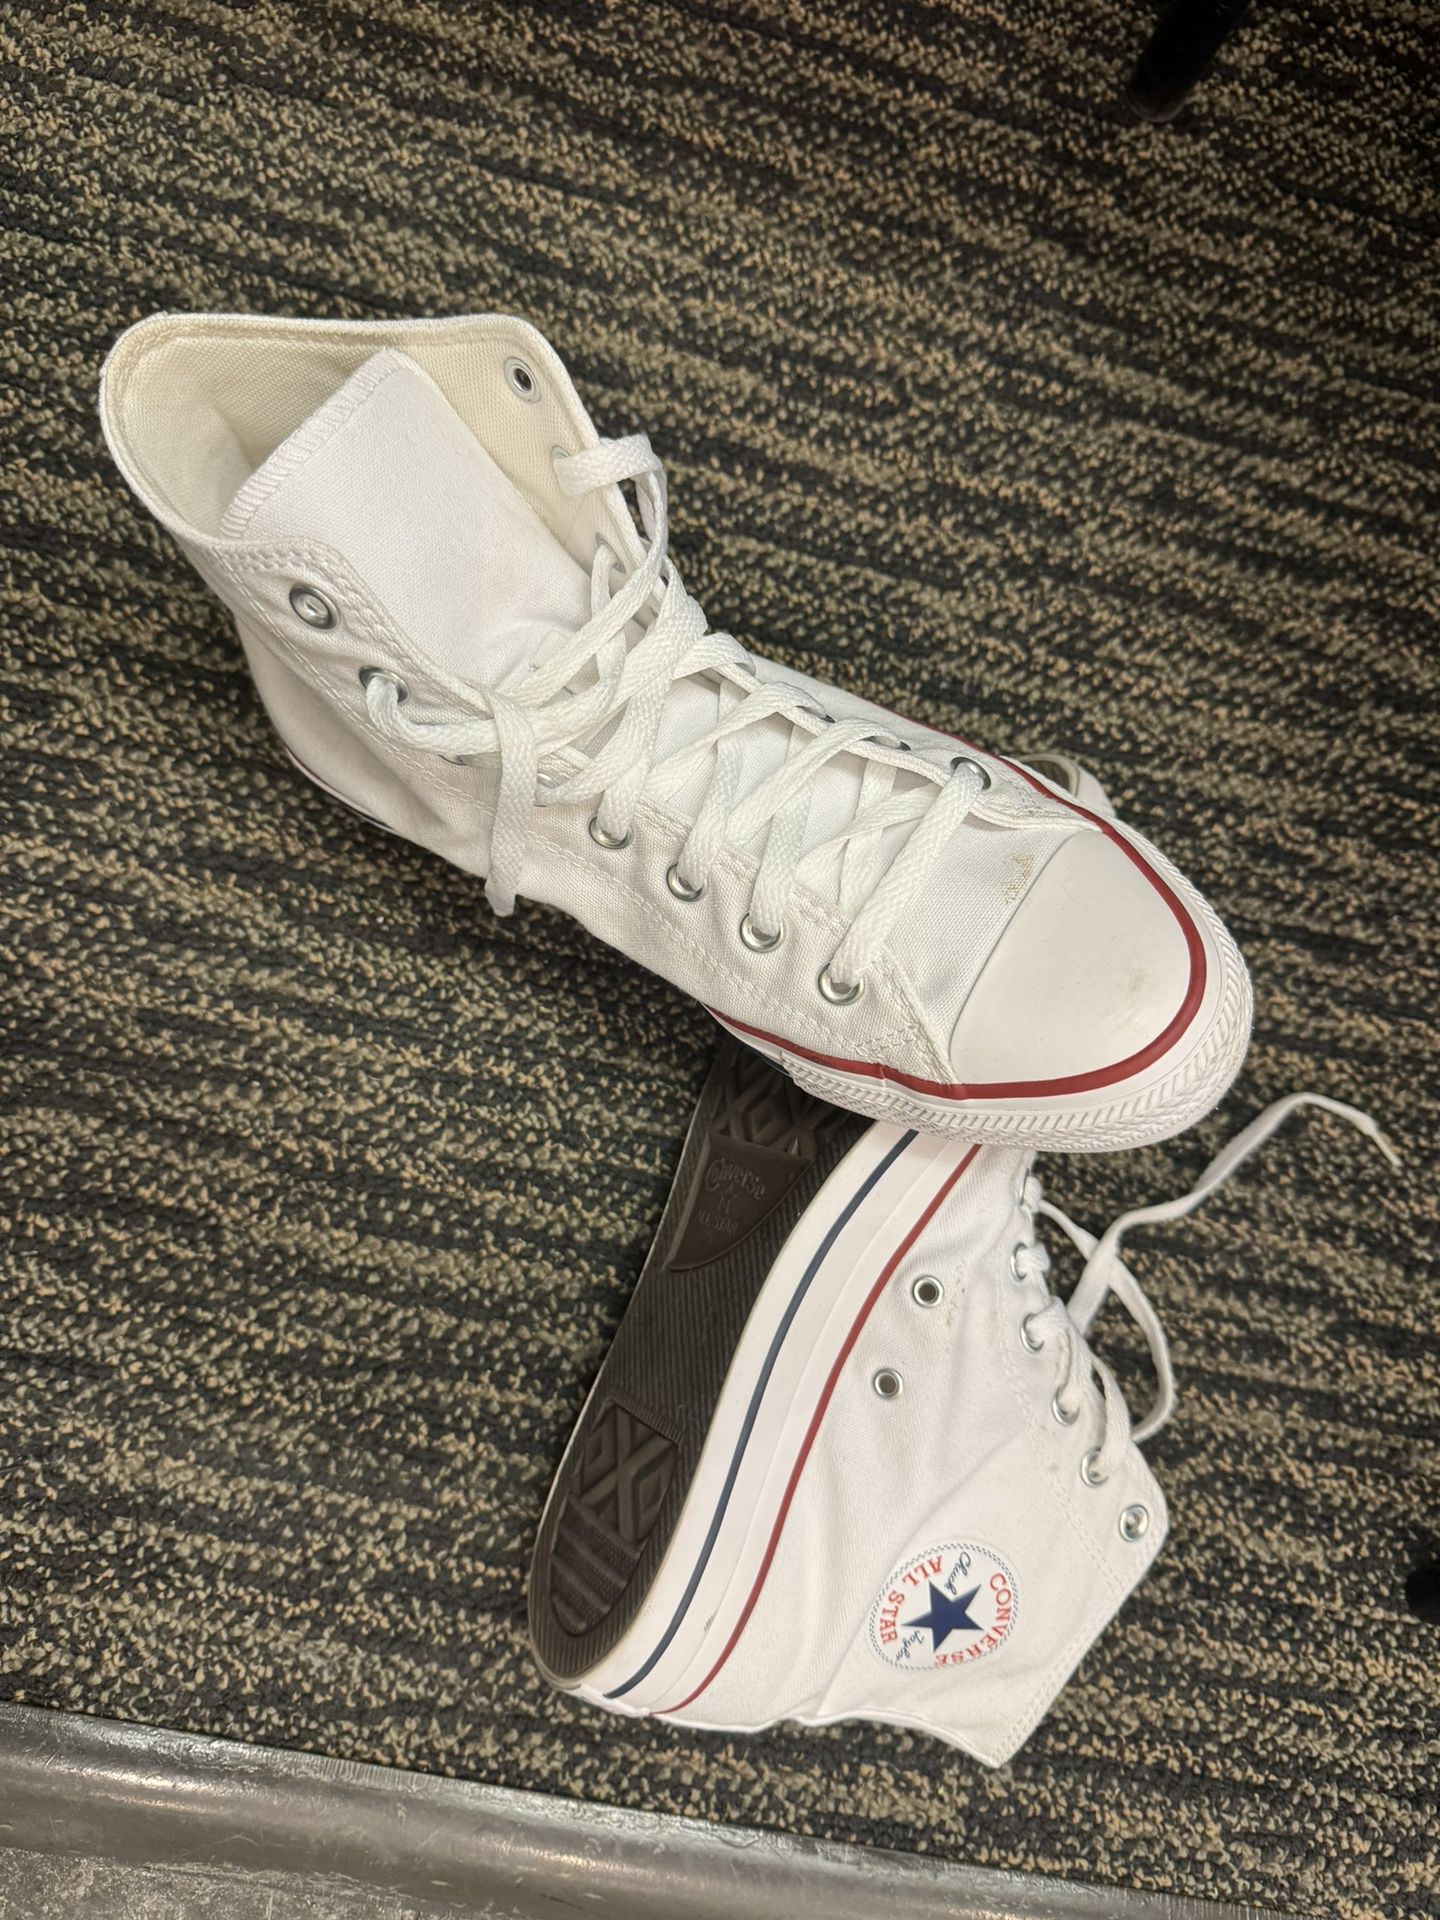 White Converse 